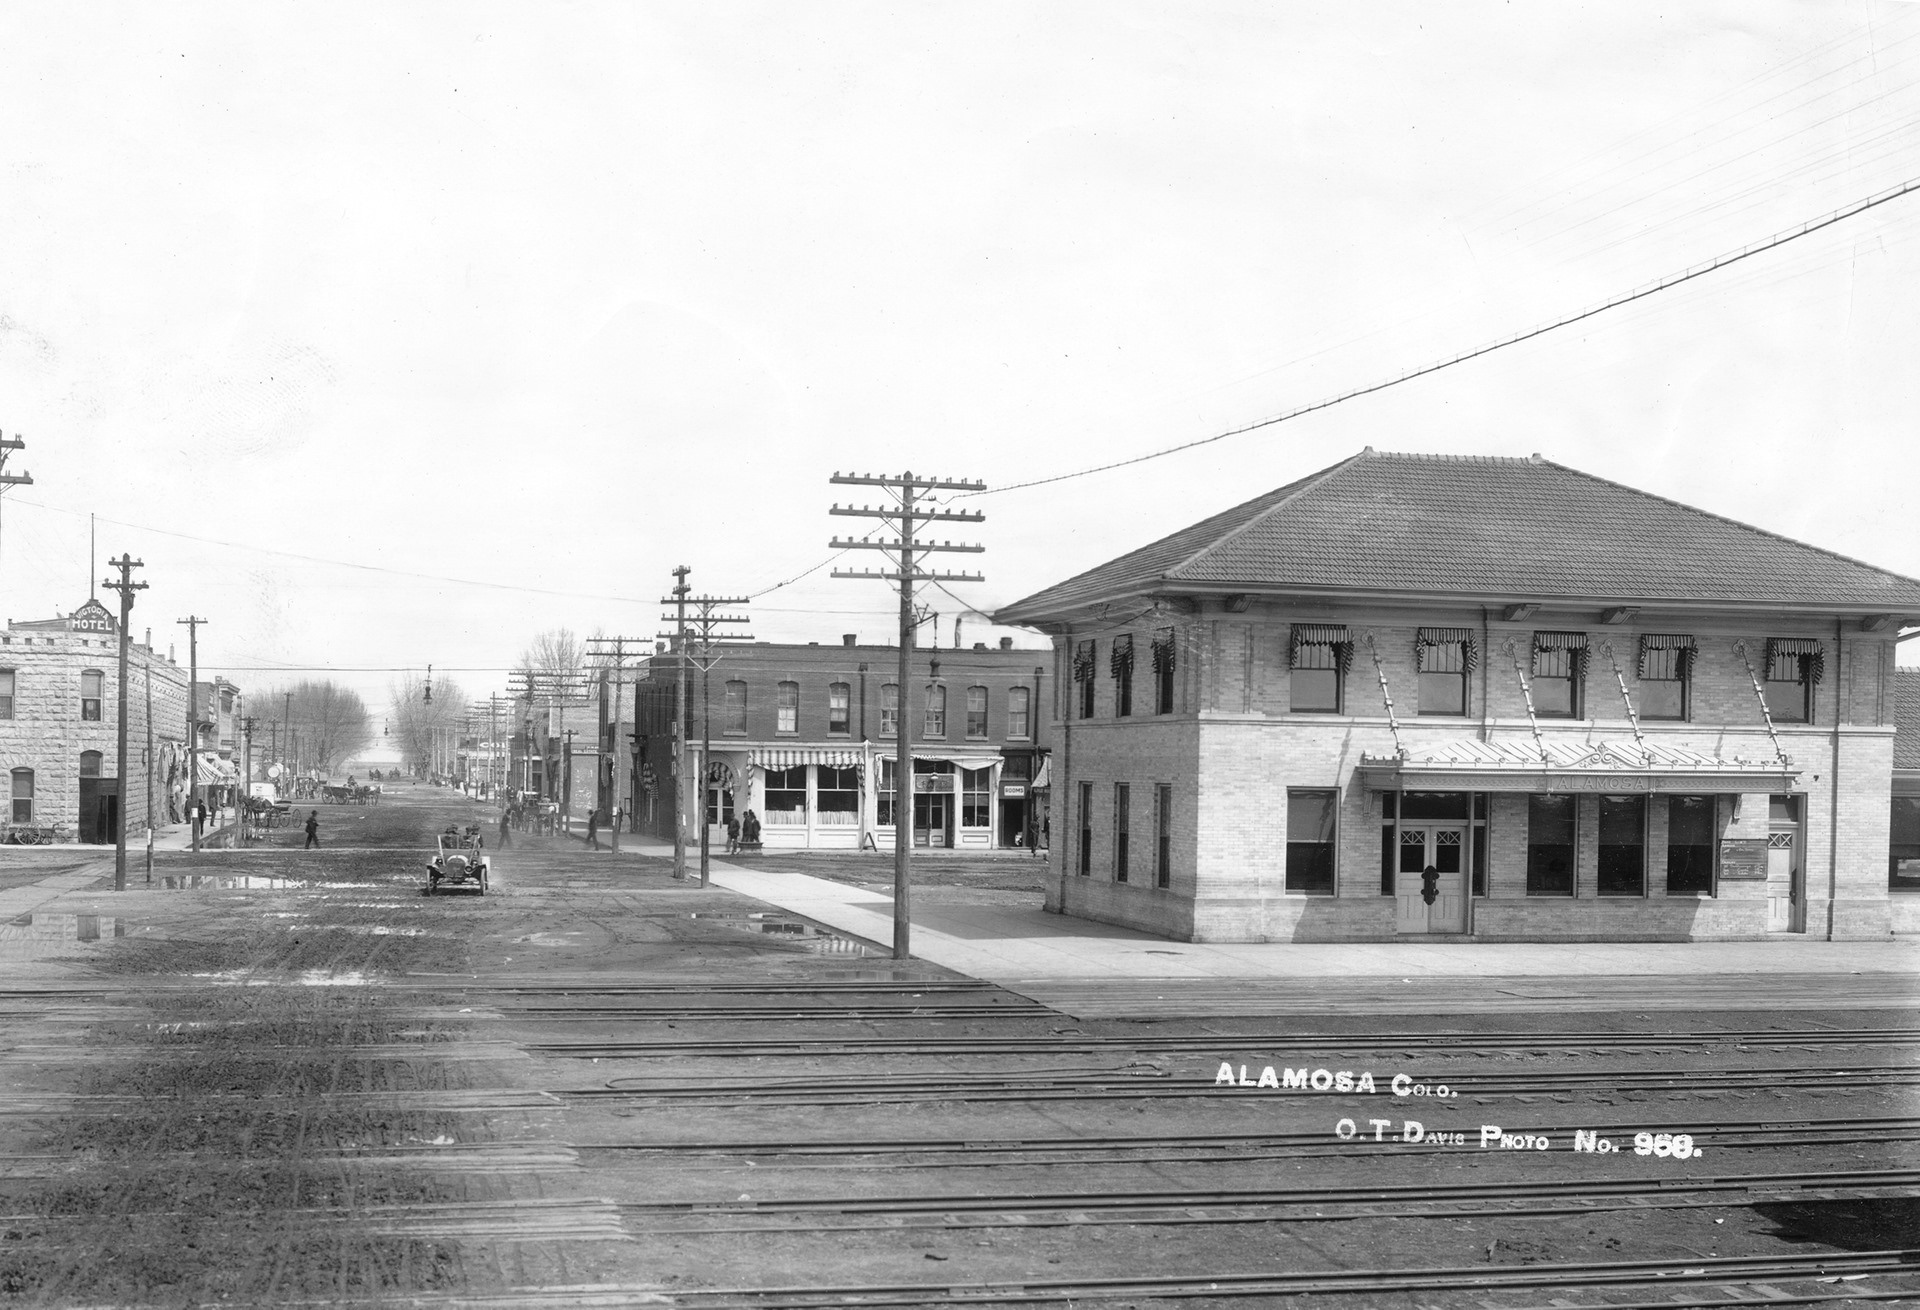 Train track crossing in Alamosa, Colorado, circa the early 1900s.